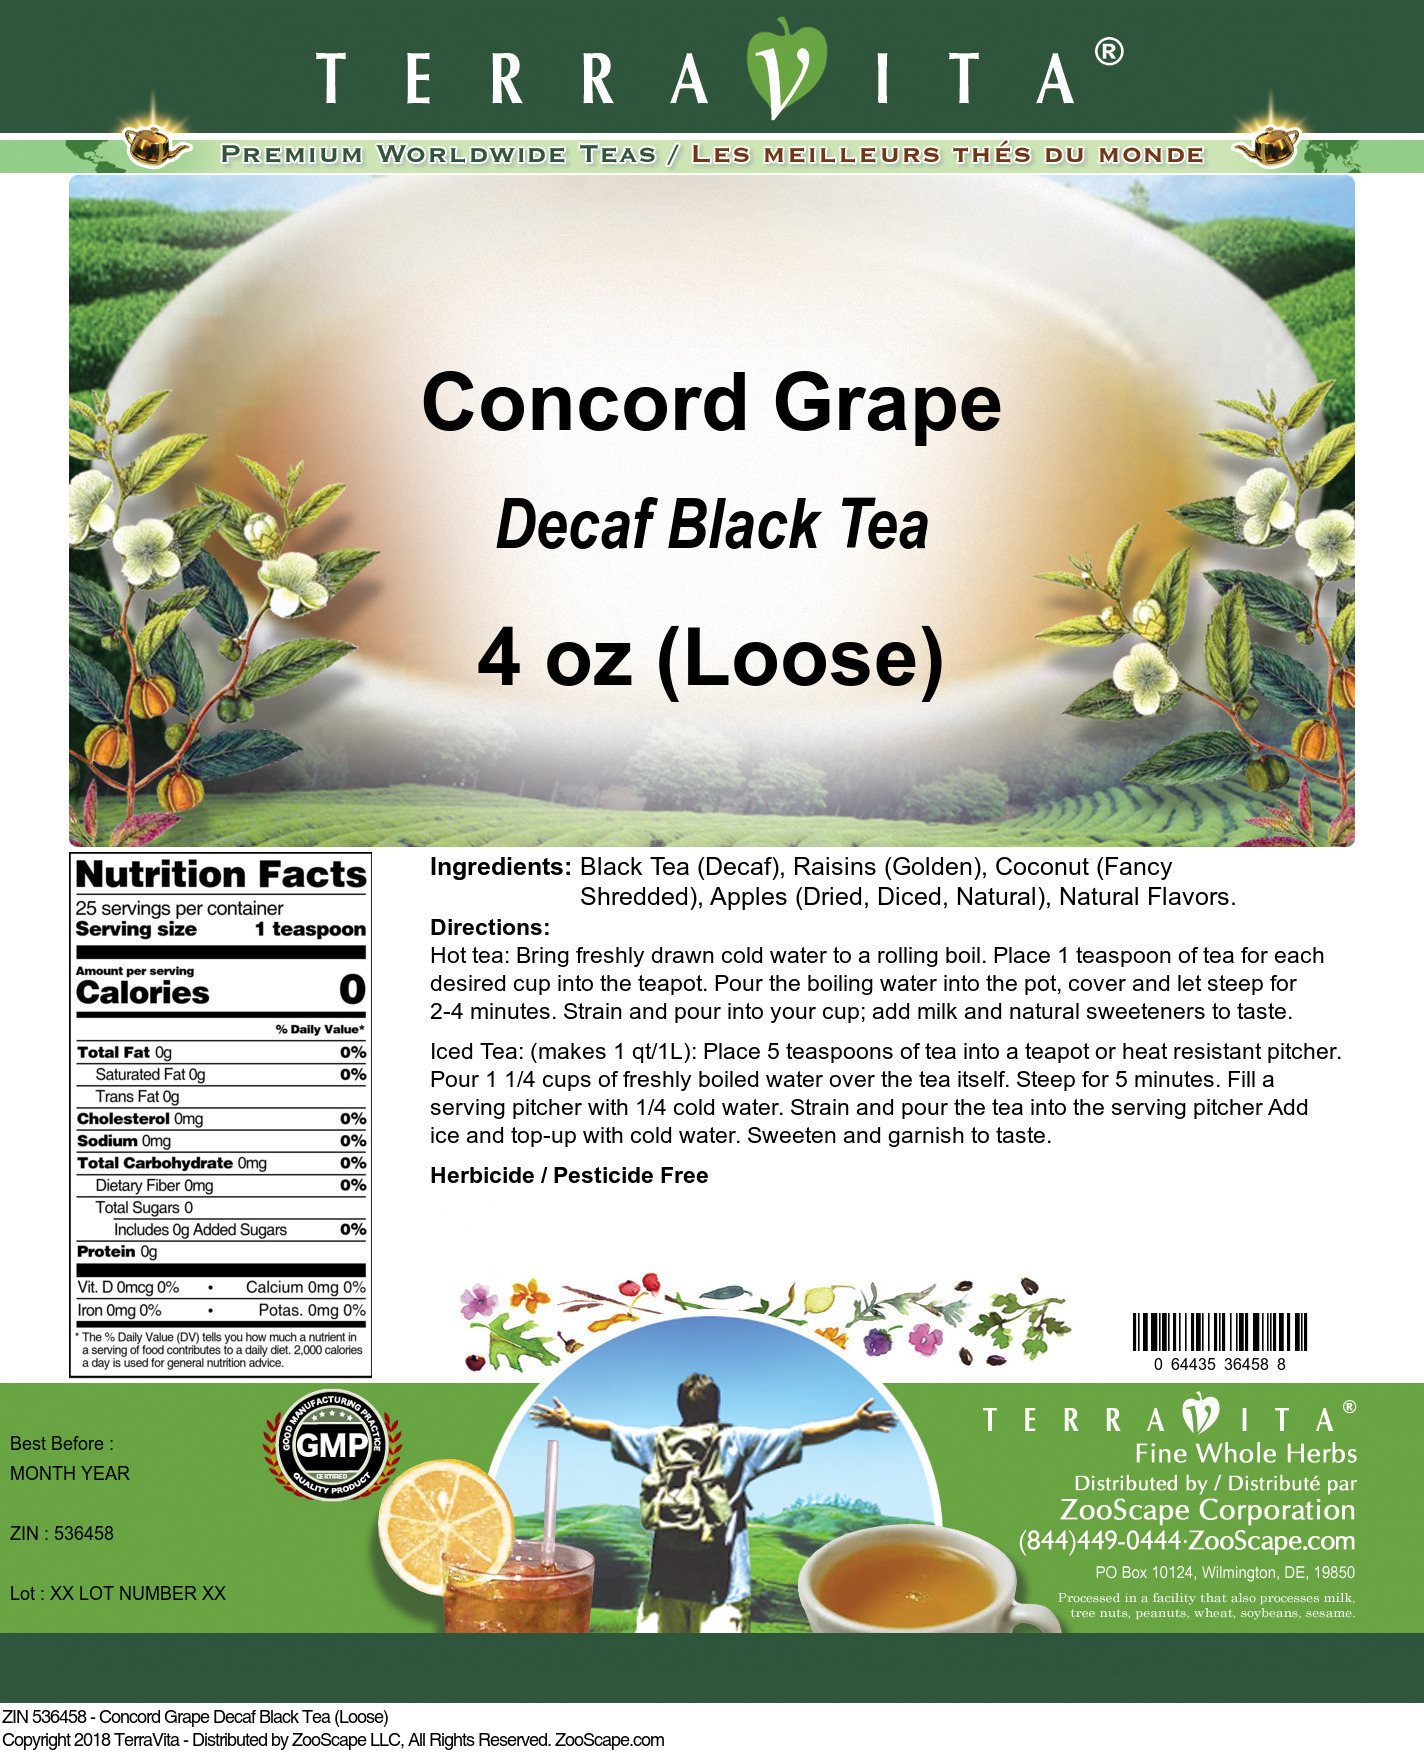 Concord Grape Decaf Black Tea (Loose) - Label